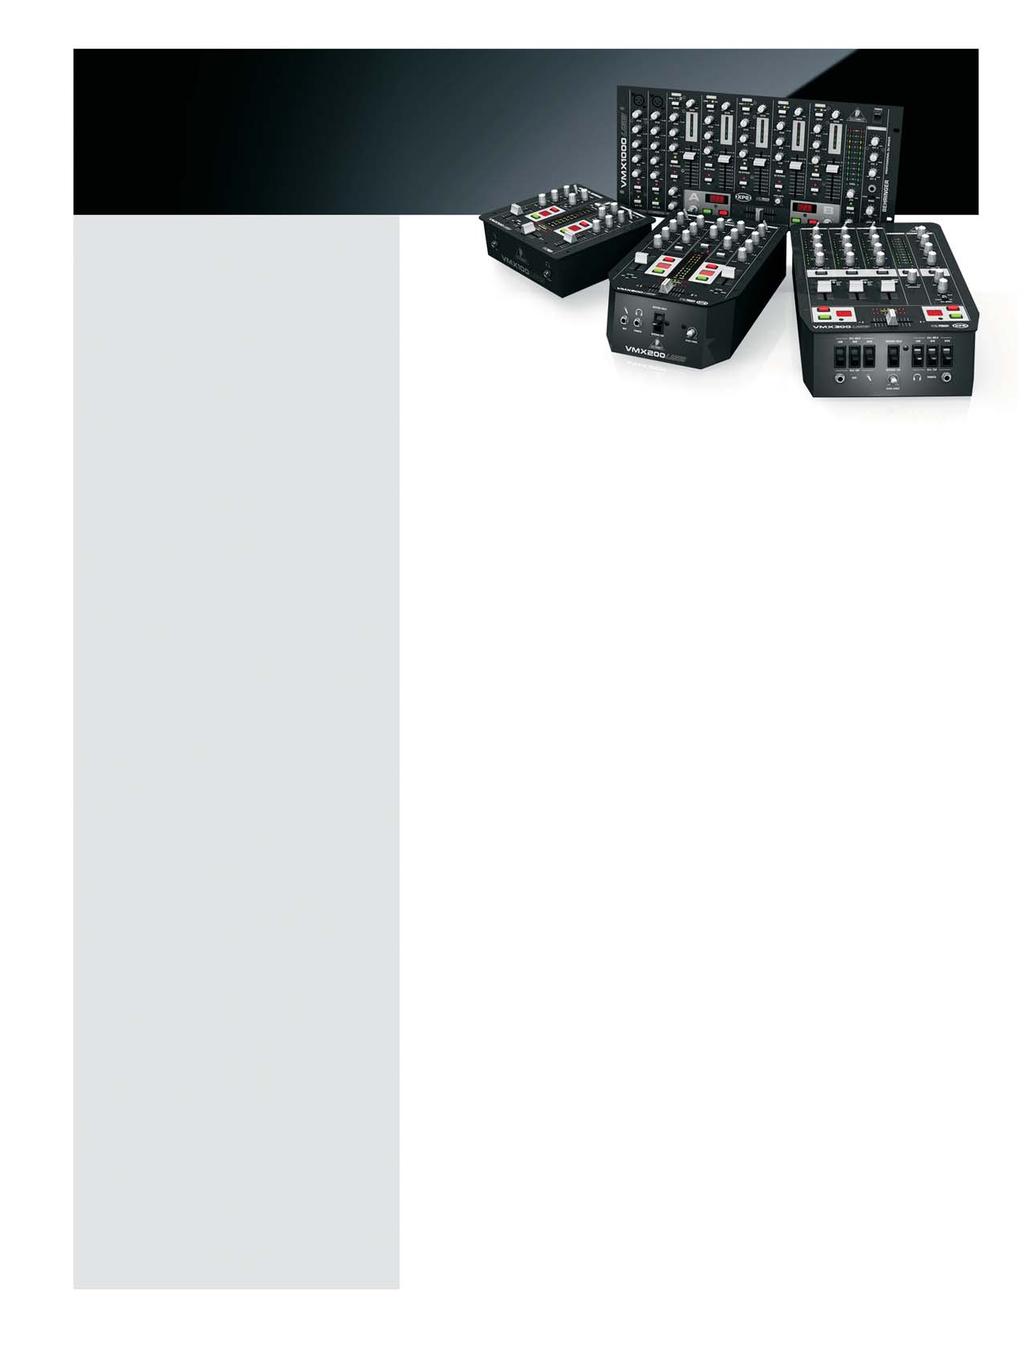 DJ Mixers PRO MIXER / / Professional DJ Mixers with USB/Audio Interface, Dual BPM Counters, VCA Control and Massive Software Bundle : Professional 7-Channel DJ Mixer with USB/Audio Interface